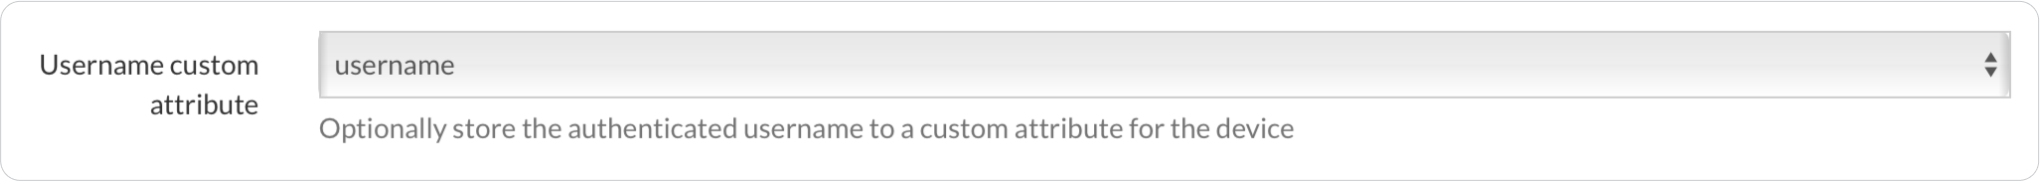 Username custom attributes